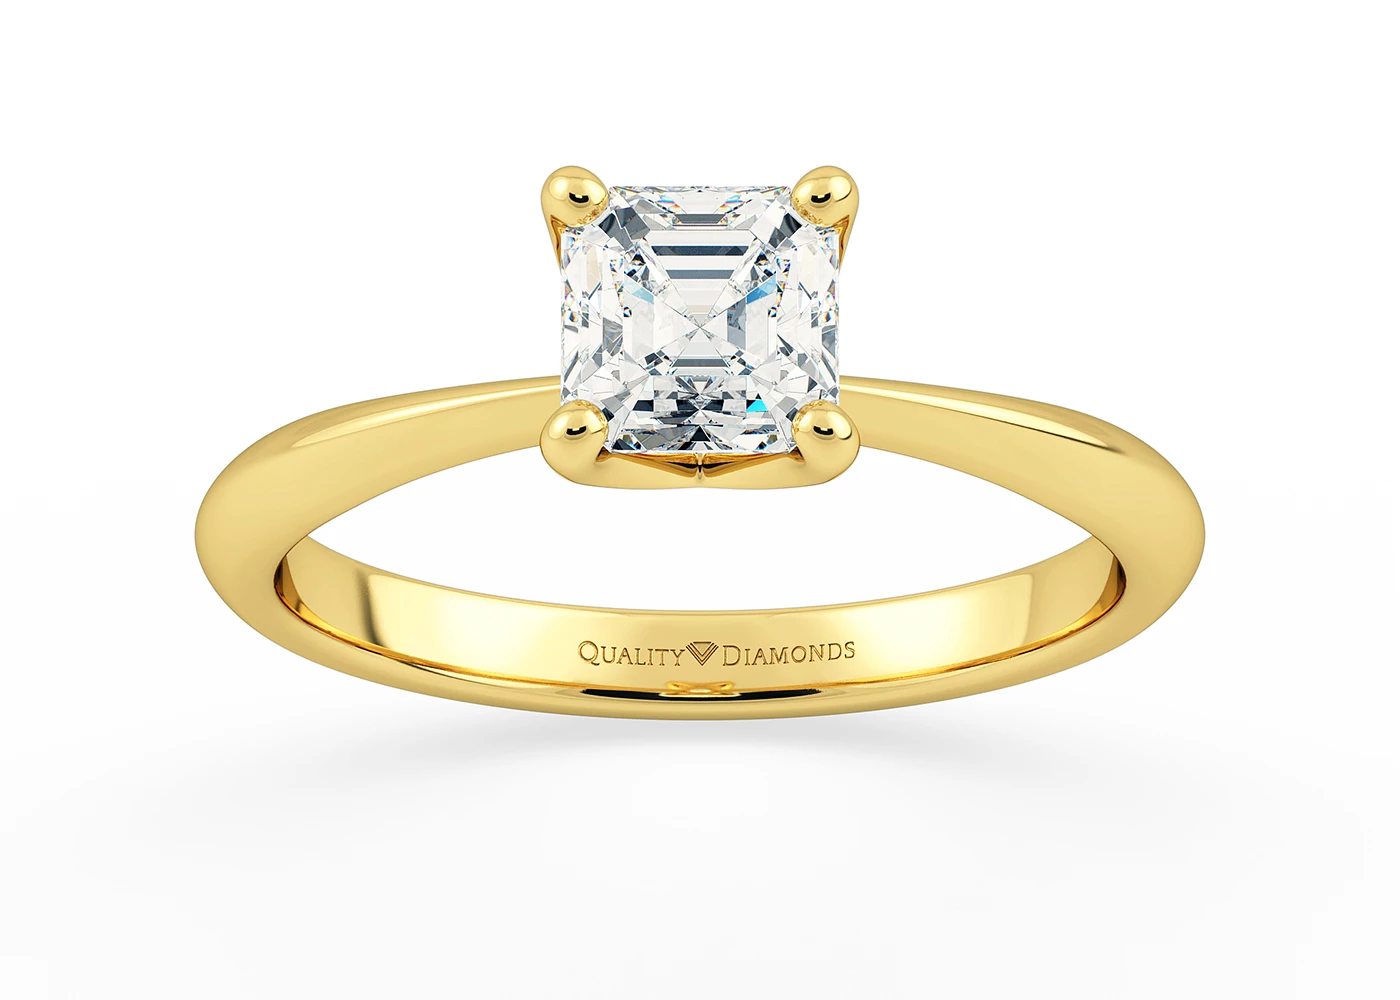 Asscher Amorette Diamond Ring in 18K Yellow Gold